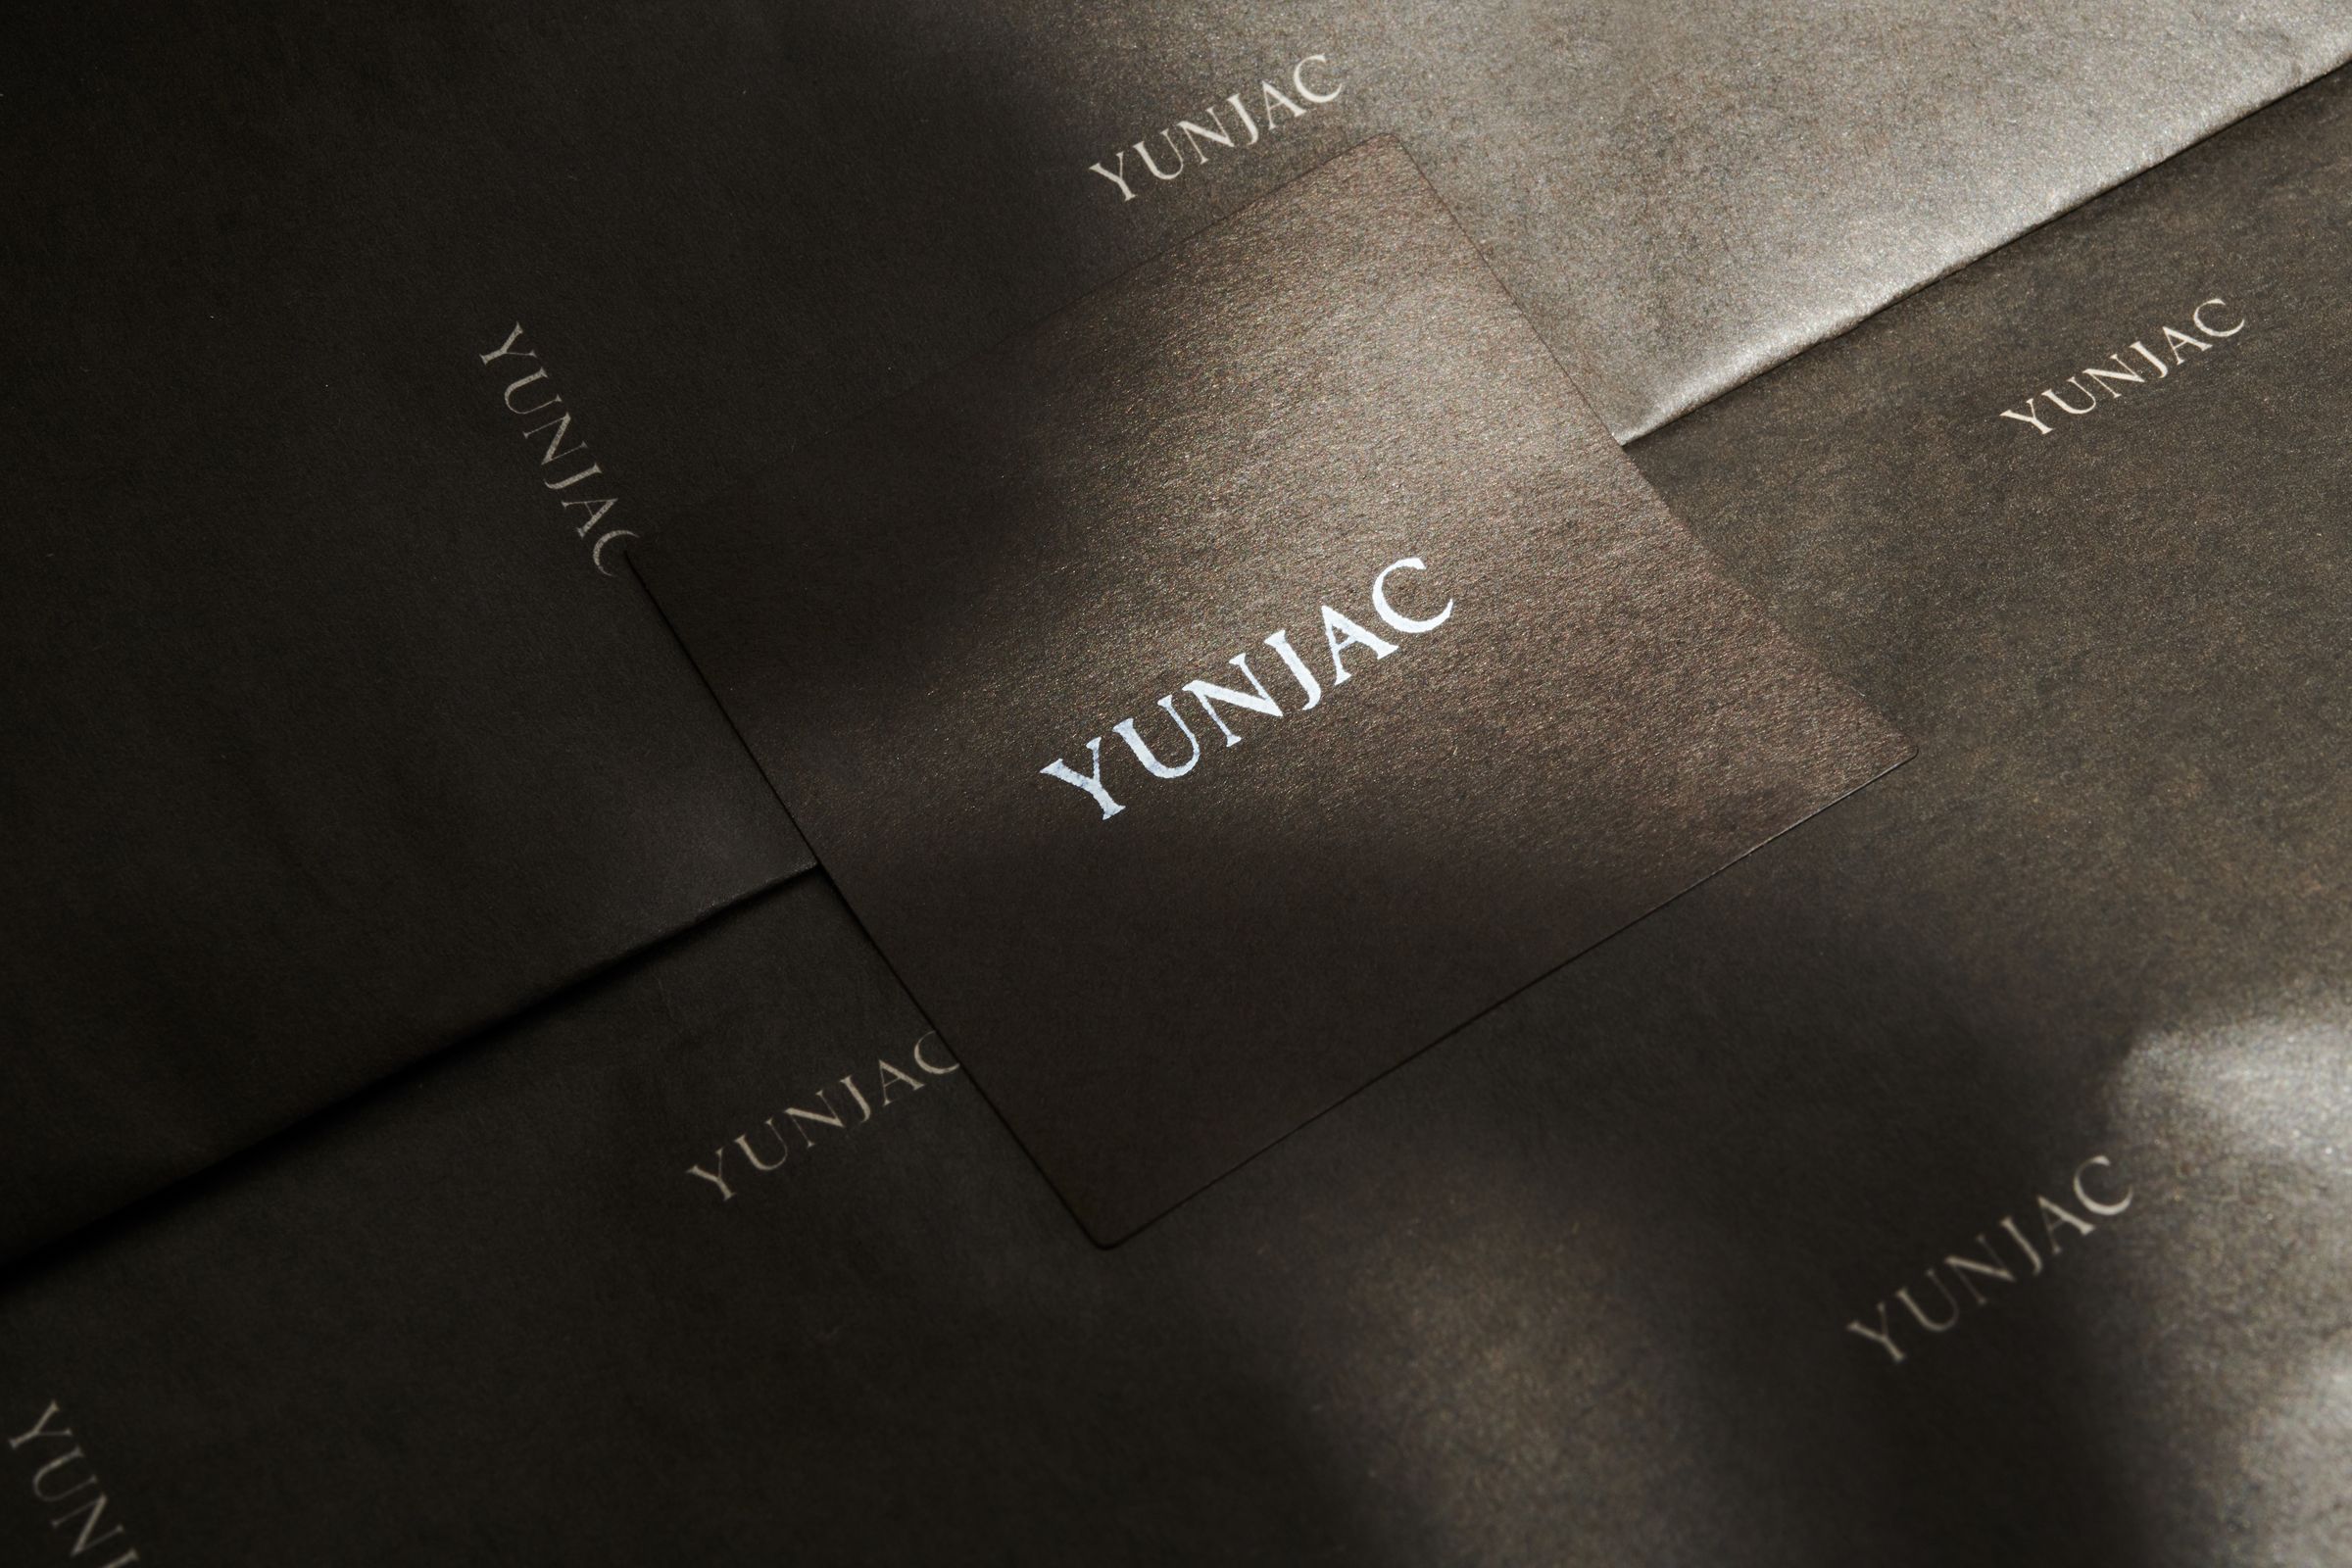 Yunjac logo on packaging